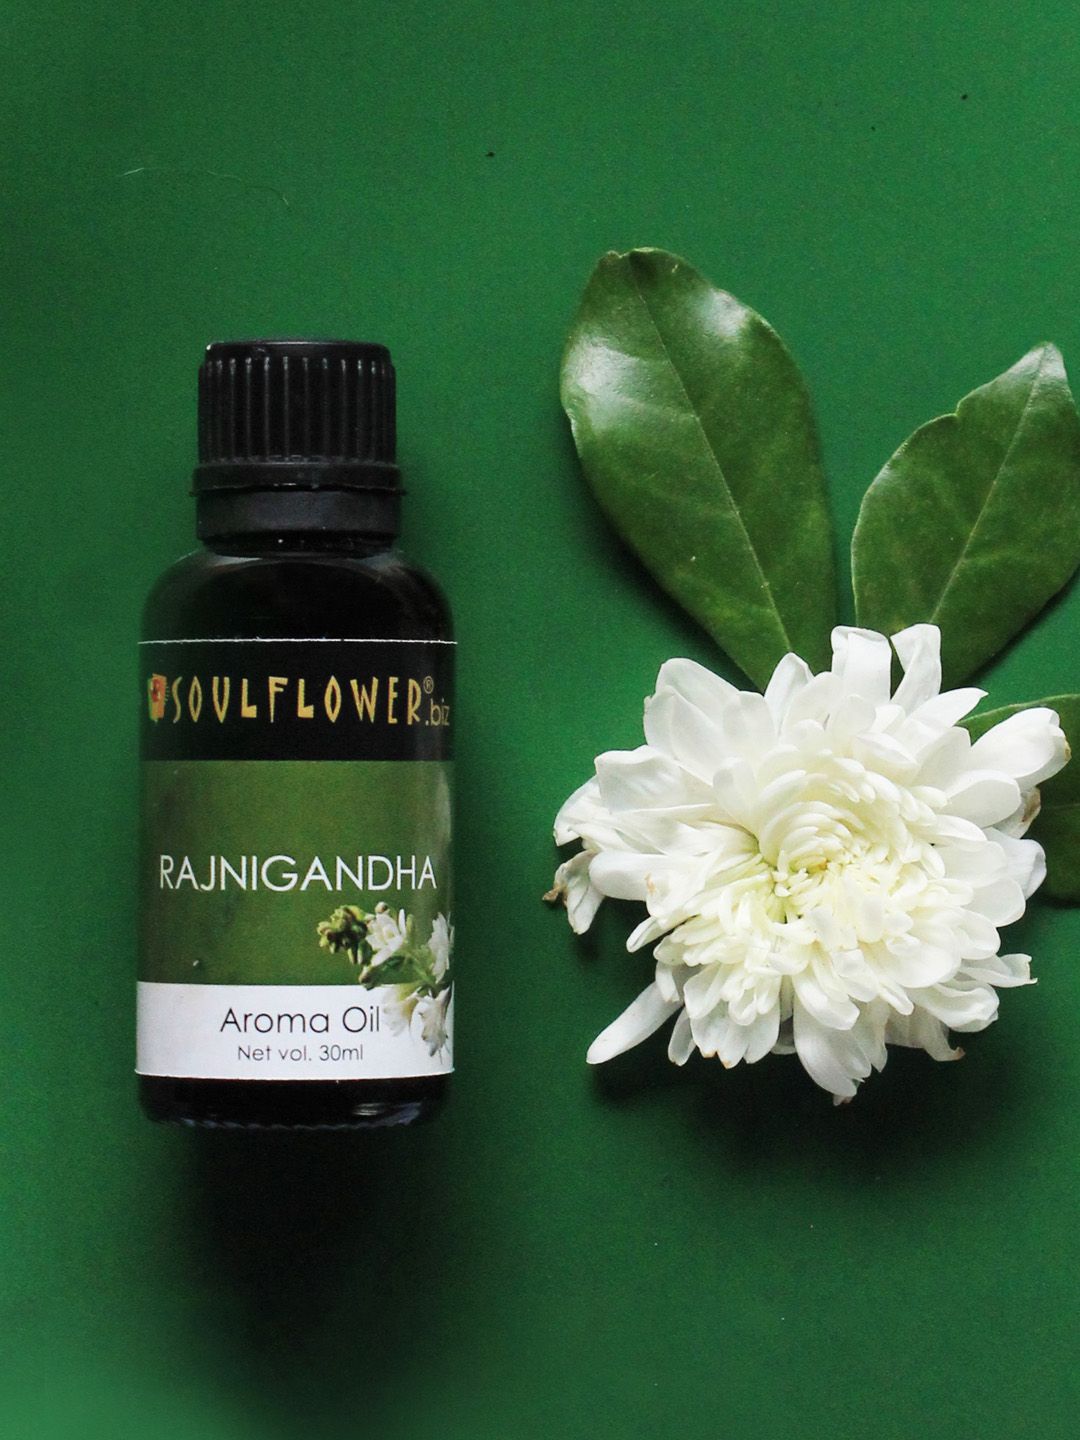 Soulflower Aroma Oil Rajanigandha 30ml Price in India